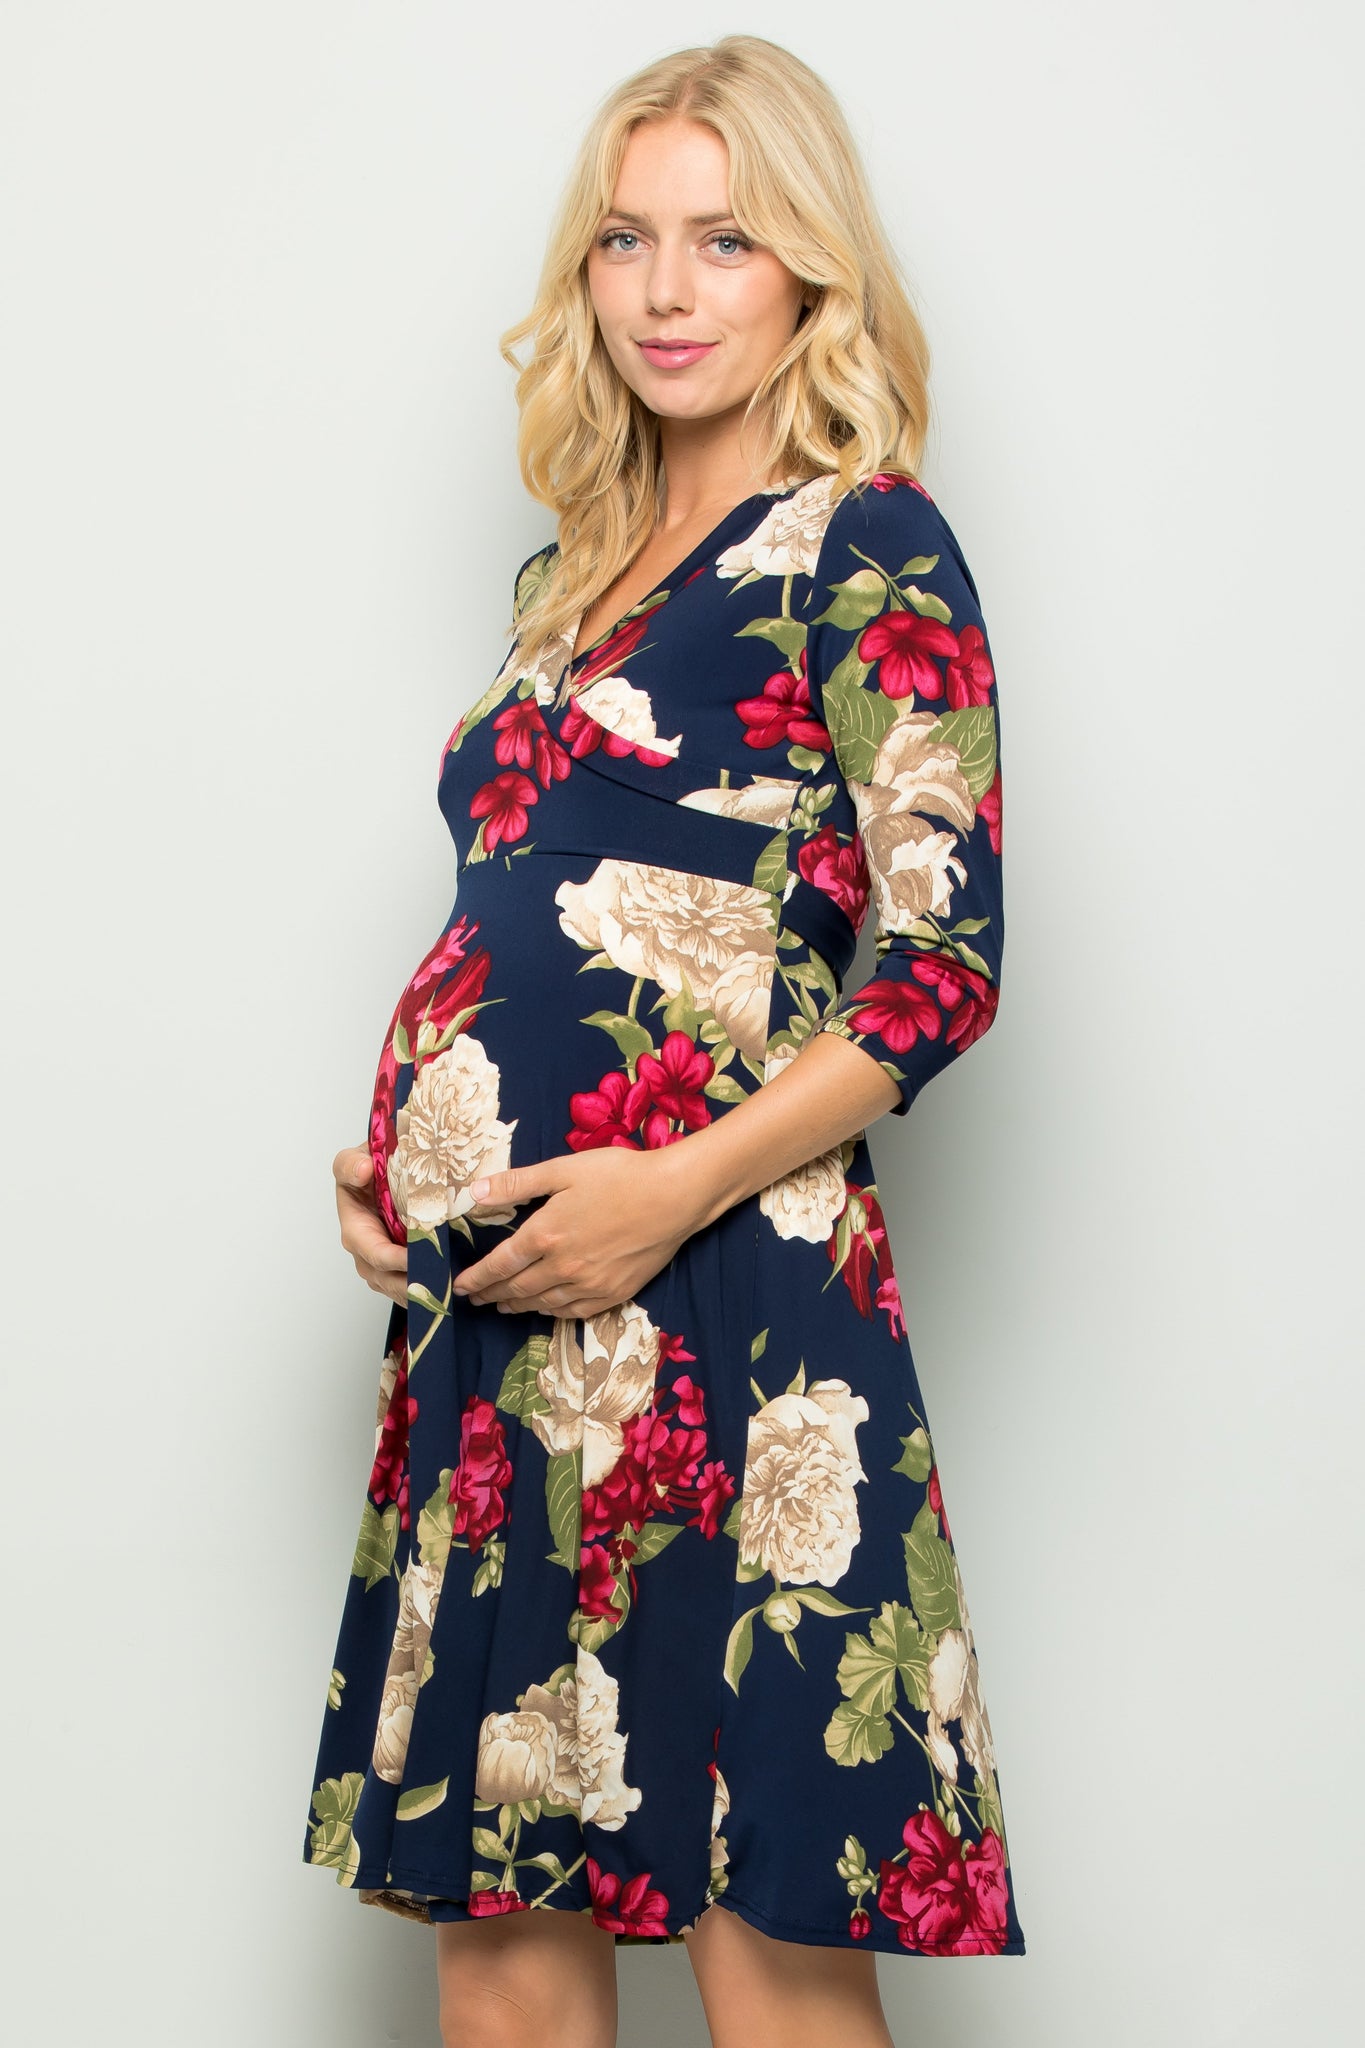 maternity pregnancy baby shower floral fit flare quarter sleeve surplice spring summer cocktail dress